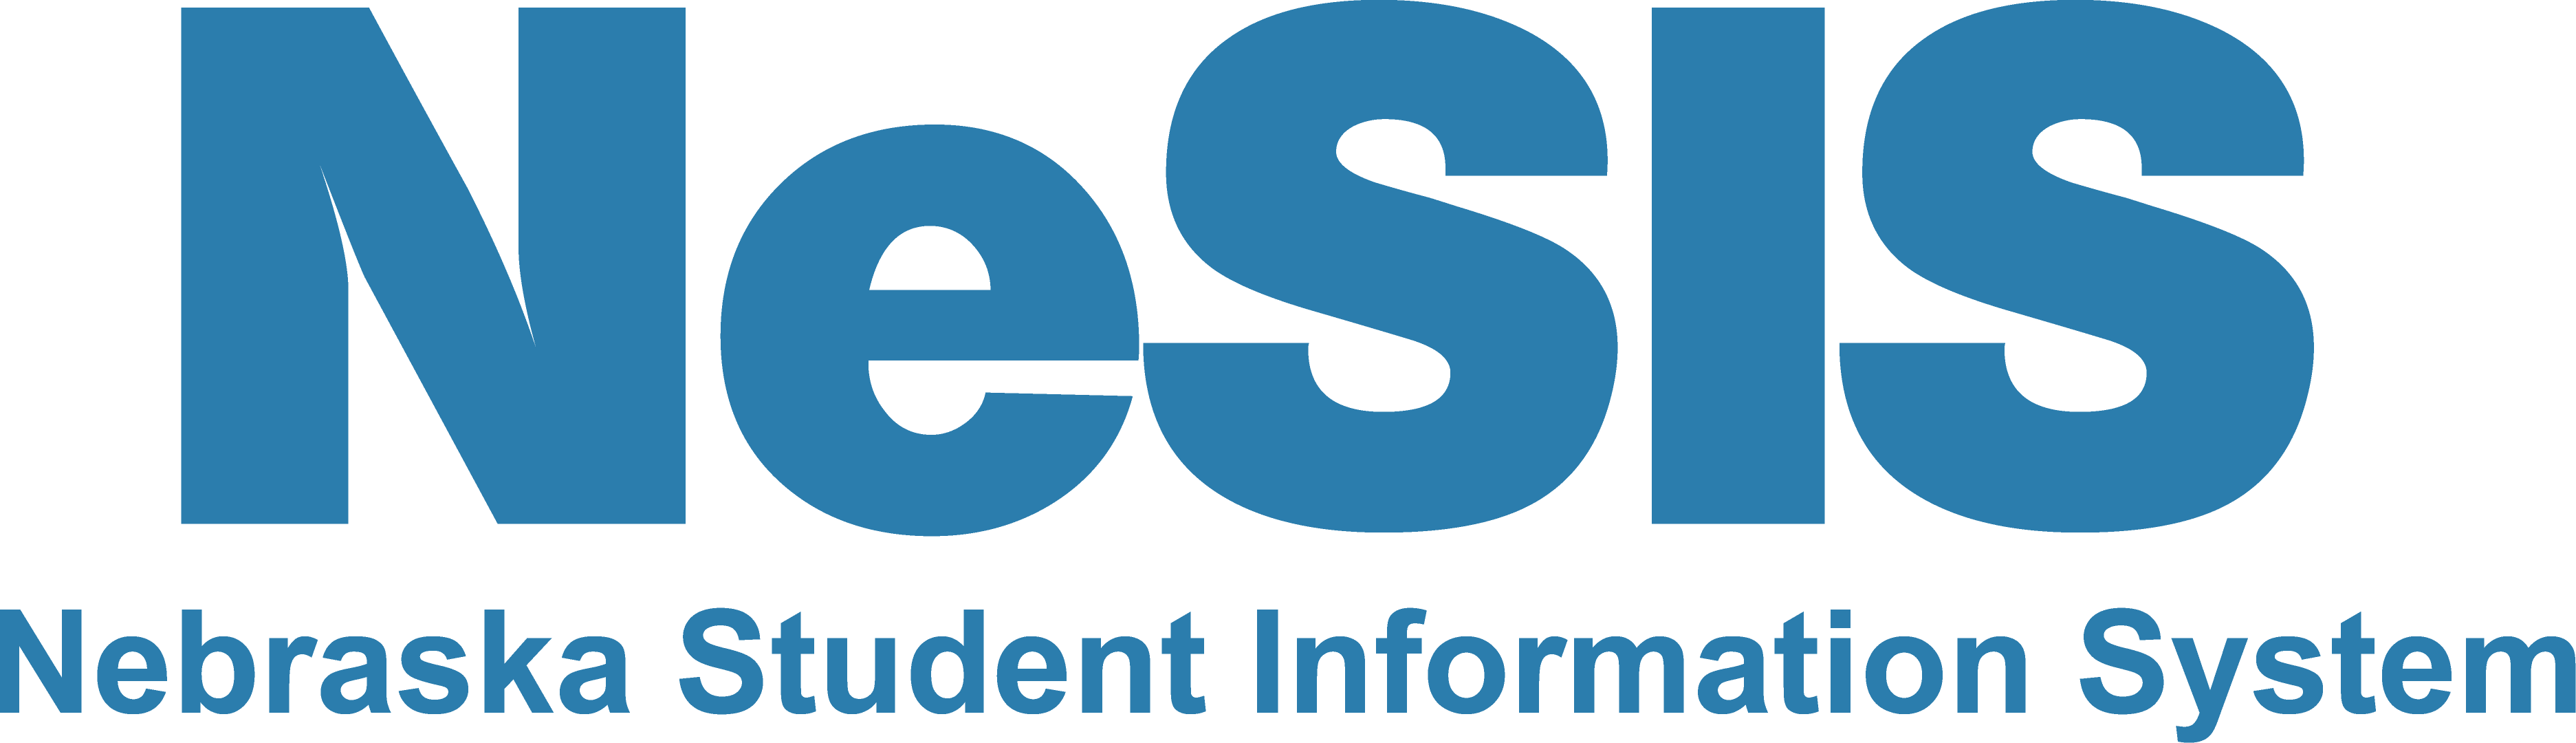 Nebraska Student Information Systems Logo (Blue)